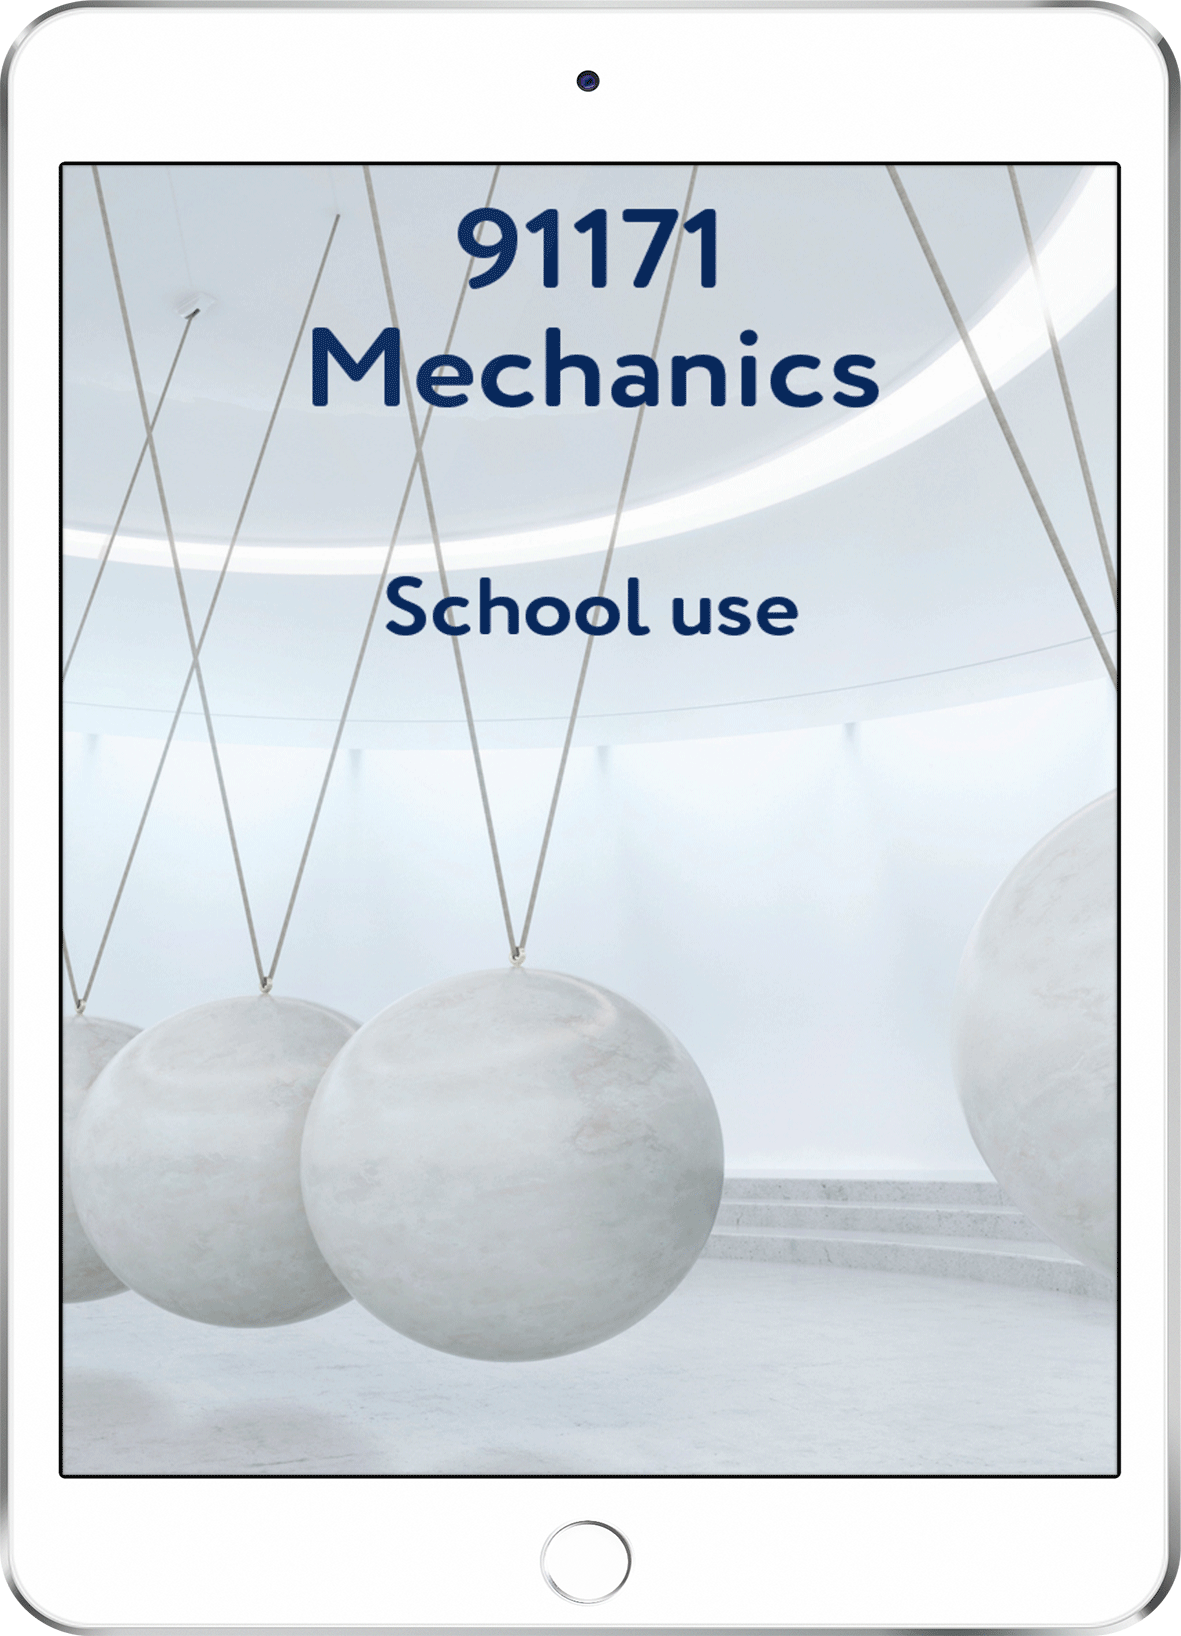 91171 Mechanics - School Use